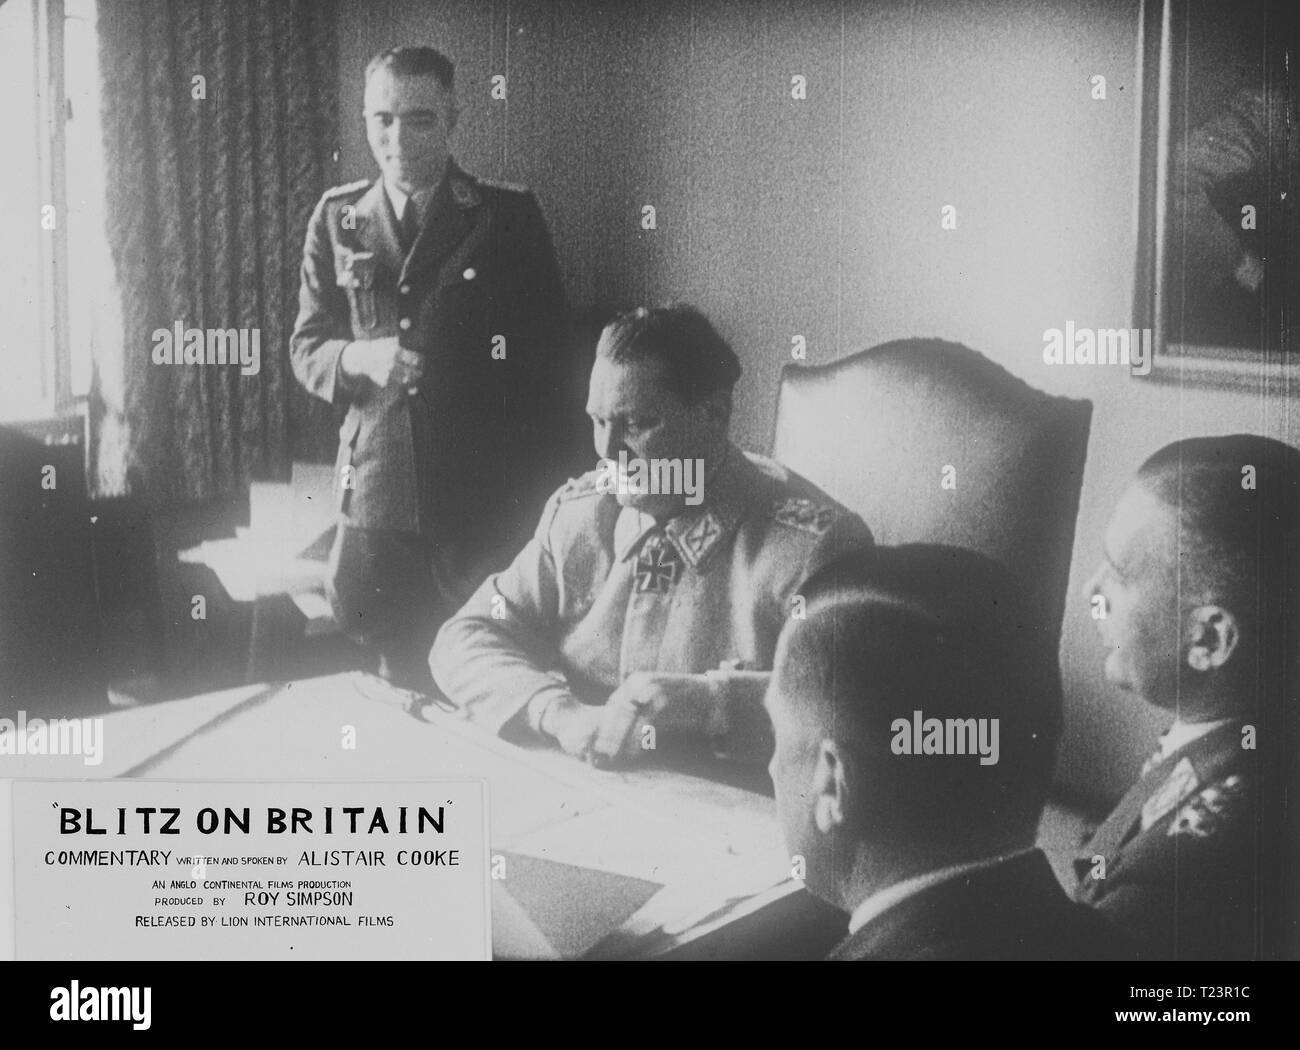 Blitz on Britain (1960) Documentary film on the Blitz during World War II      Date: 1960 Stock Photo